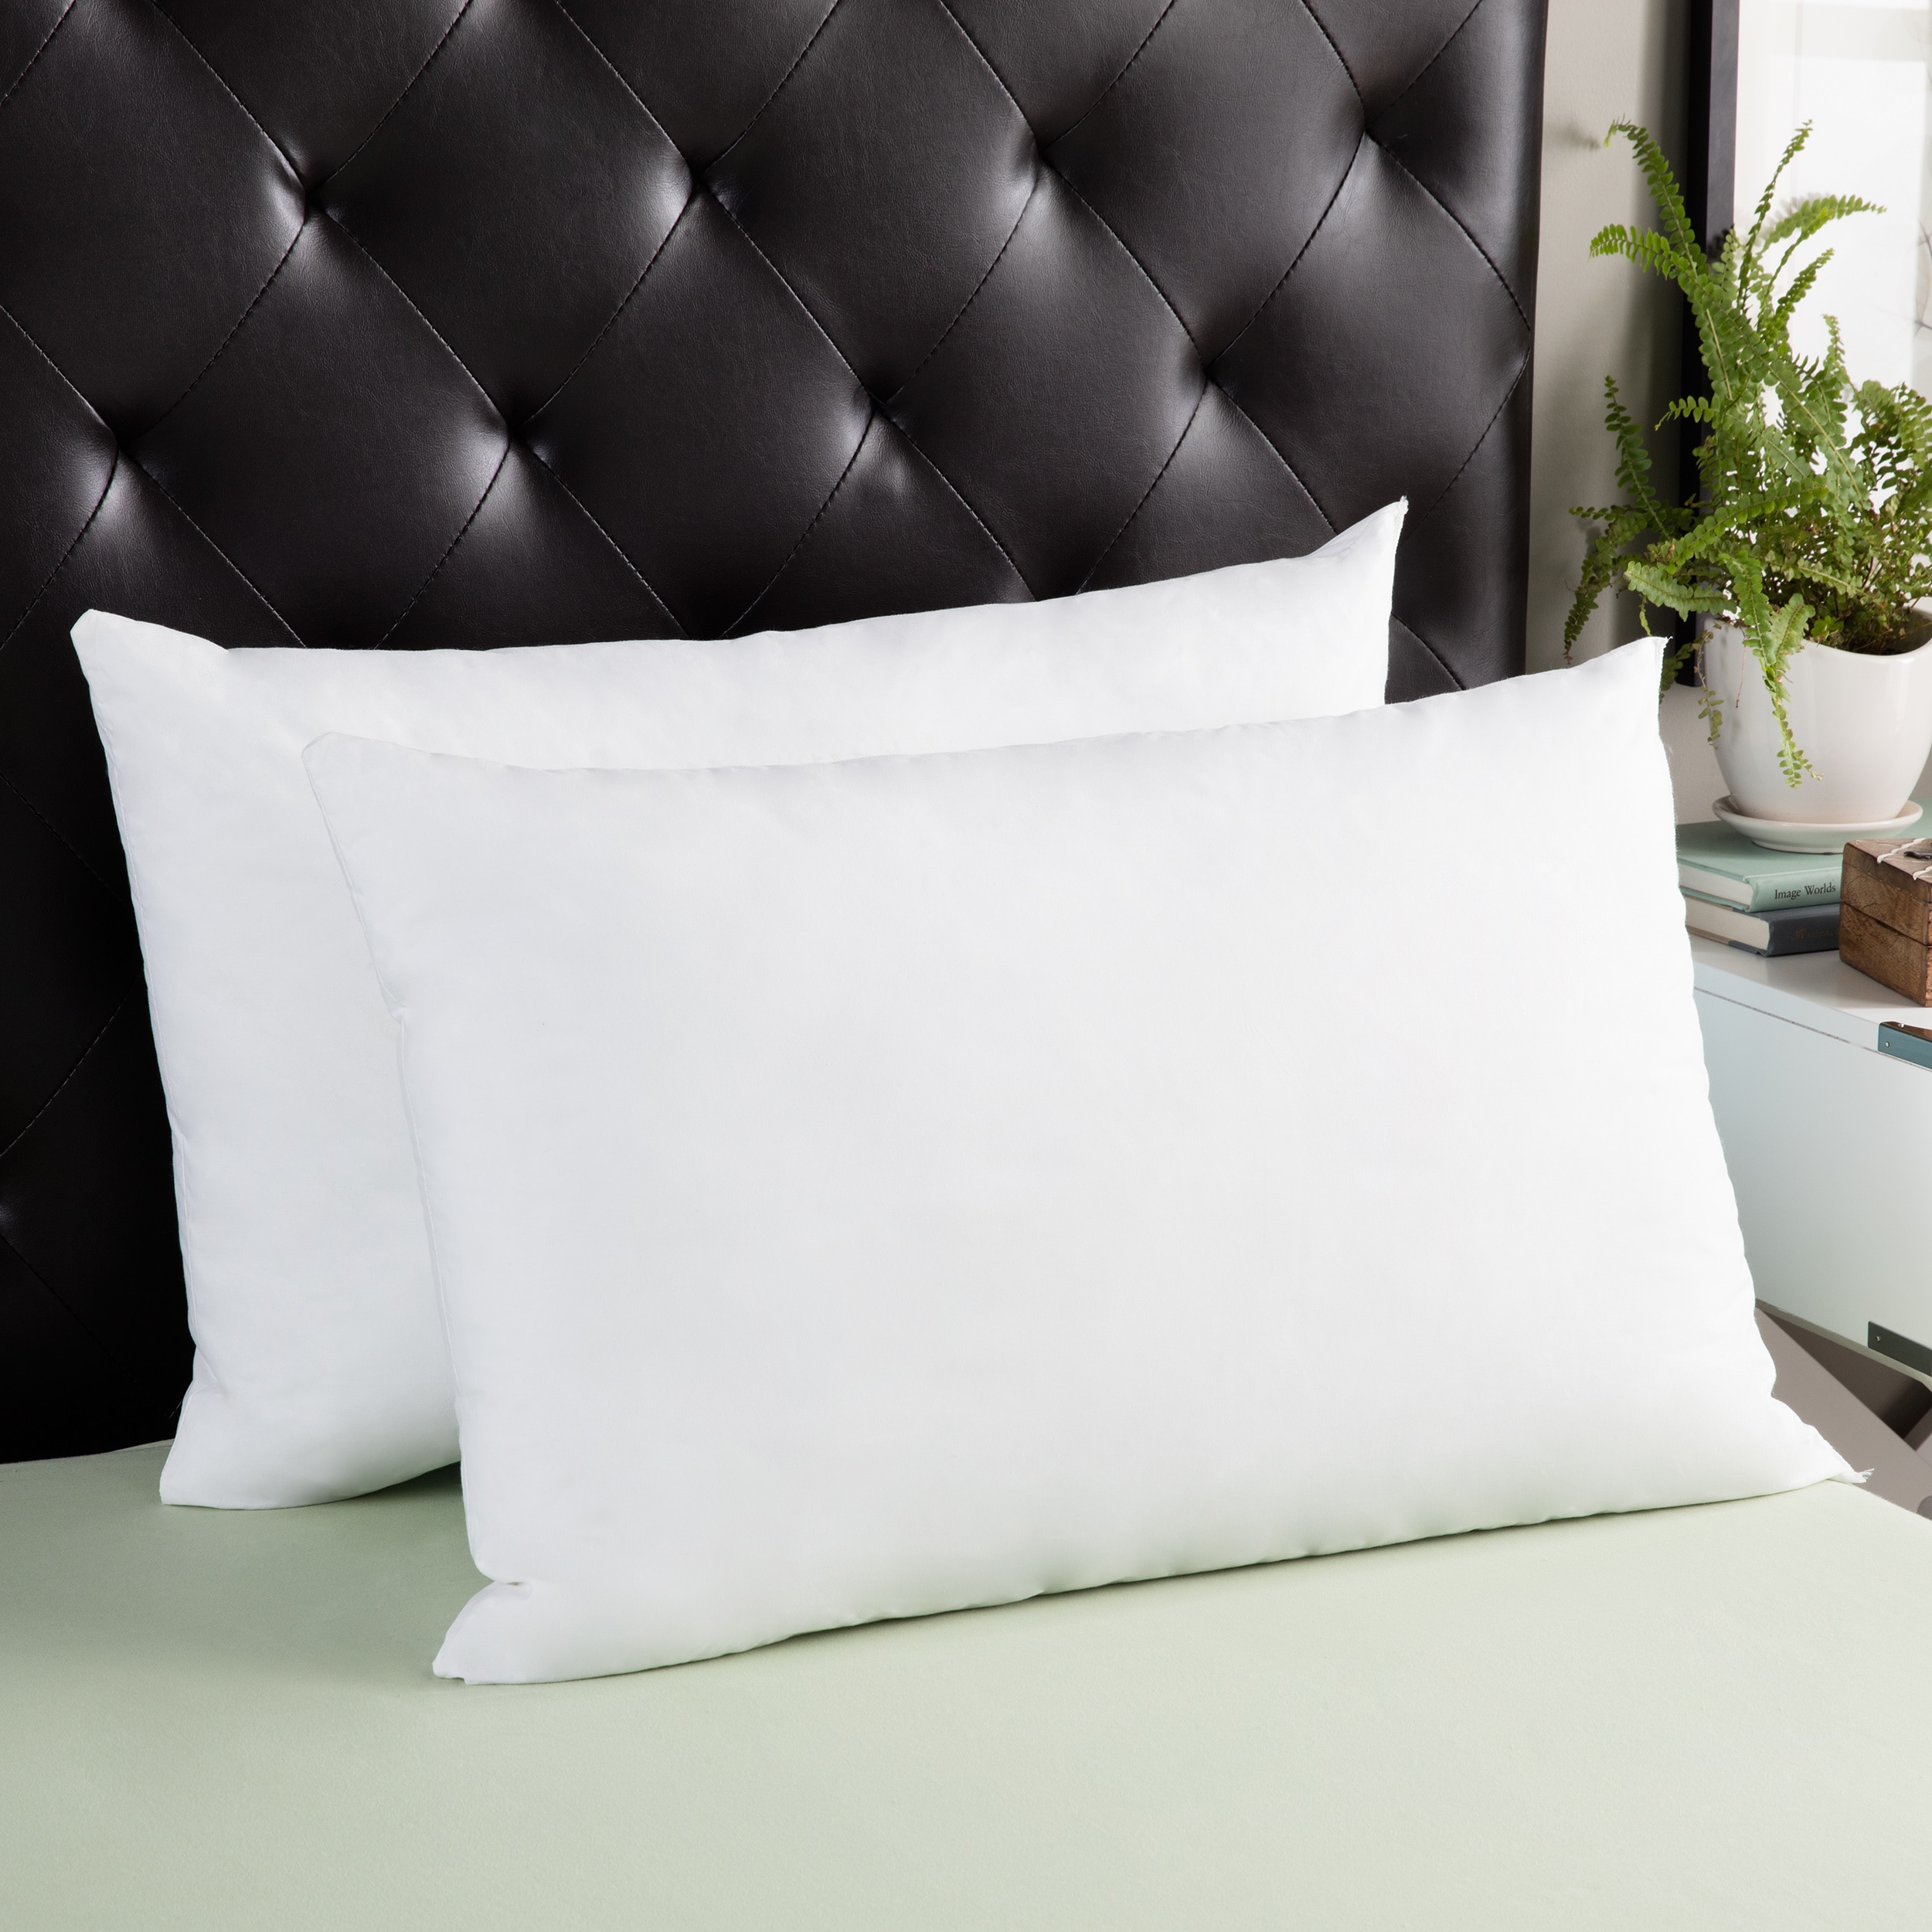 Buy Plush Down-Alternative Gel-Fiber Pillow (2-Pack) (Queen